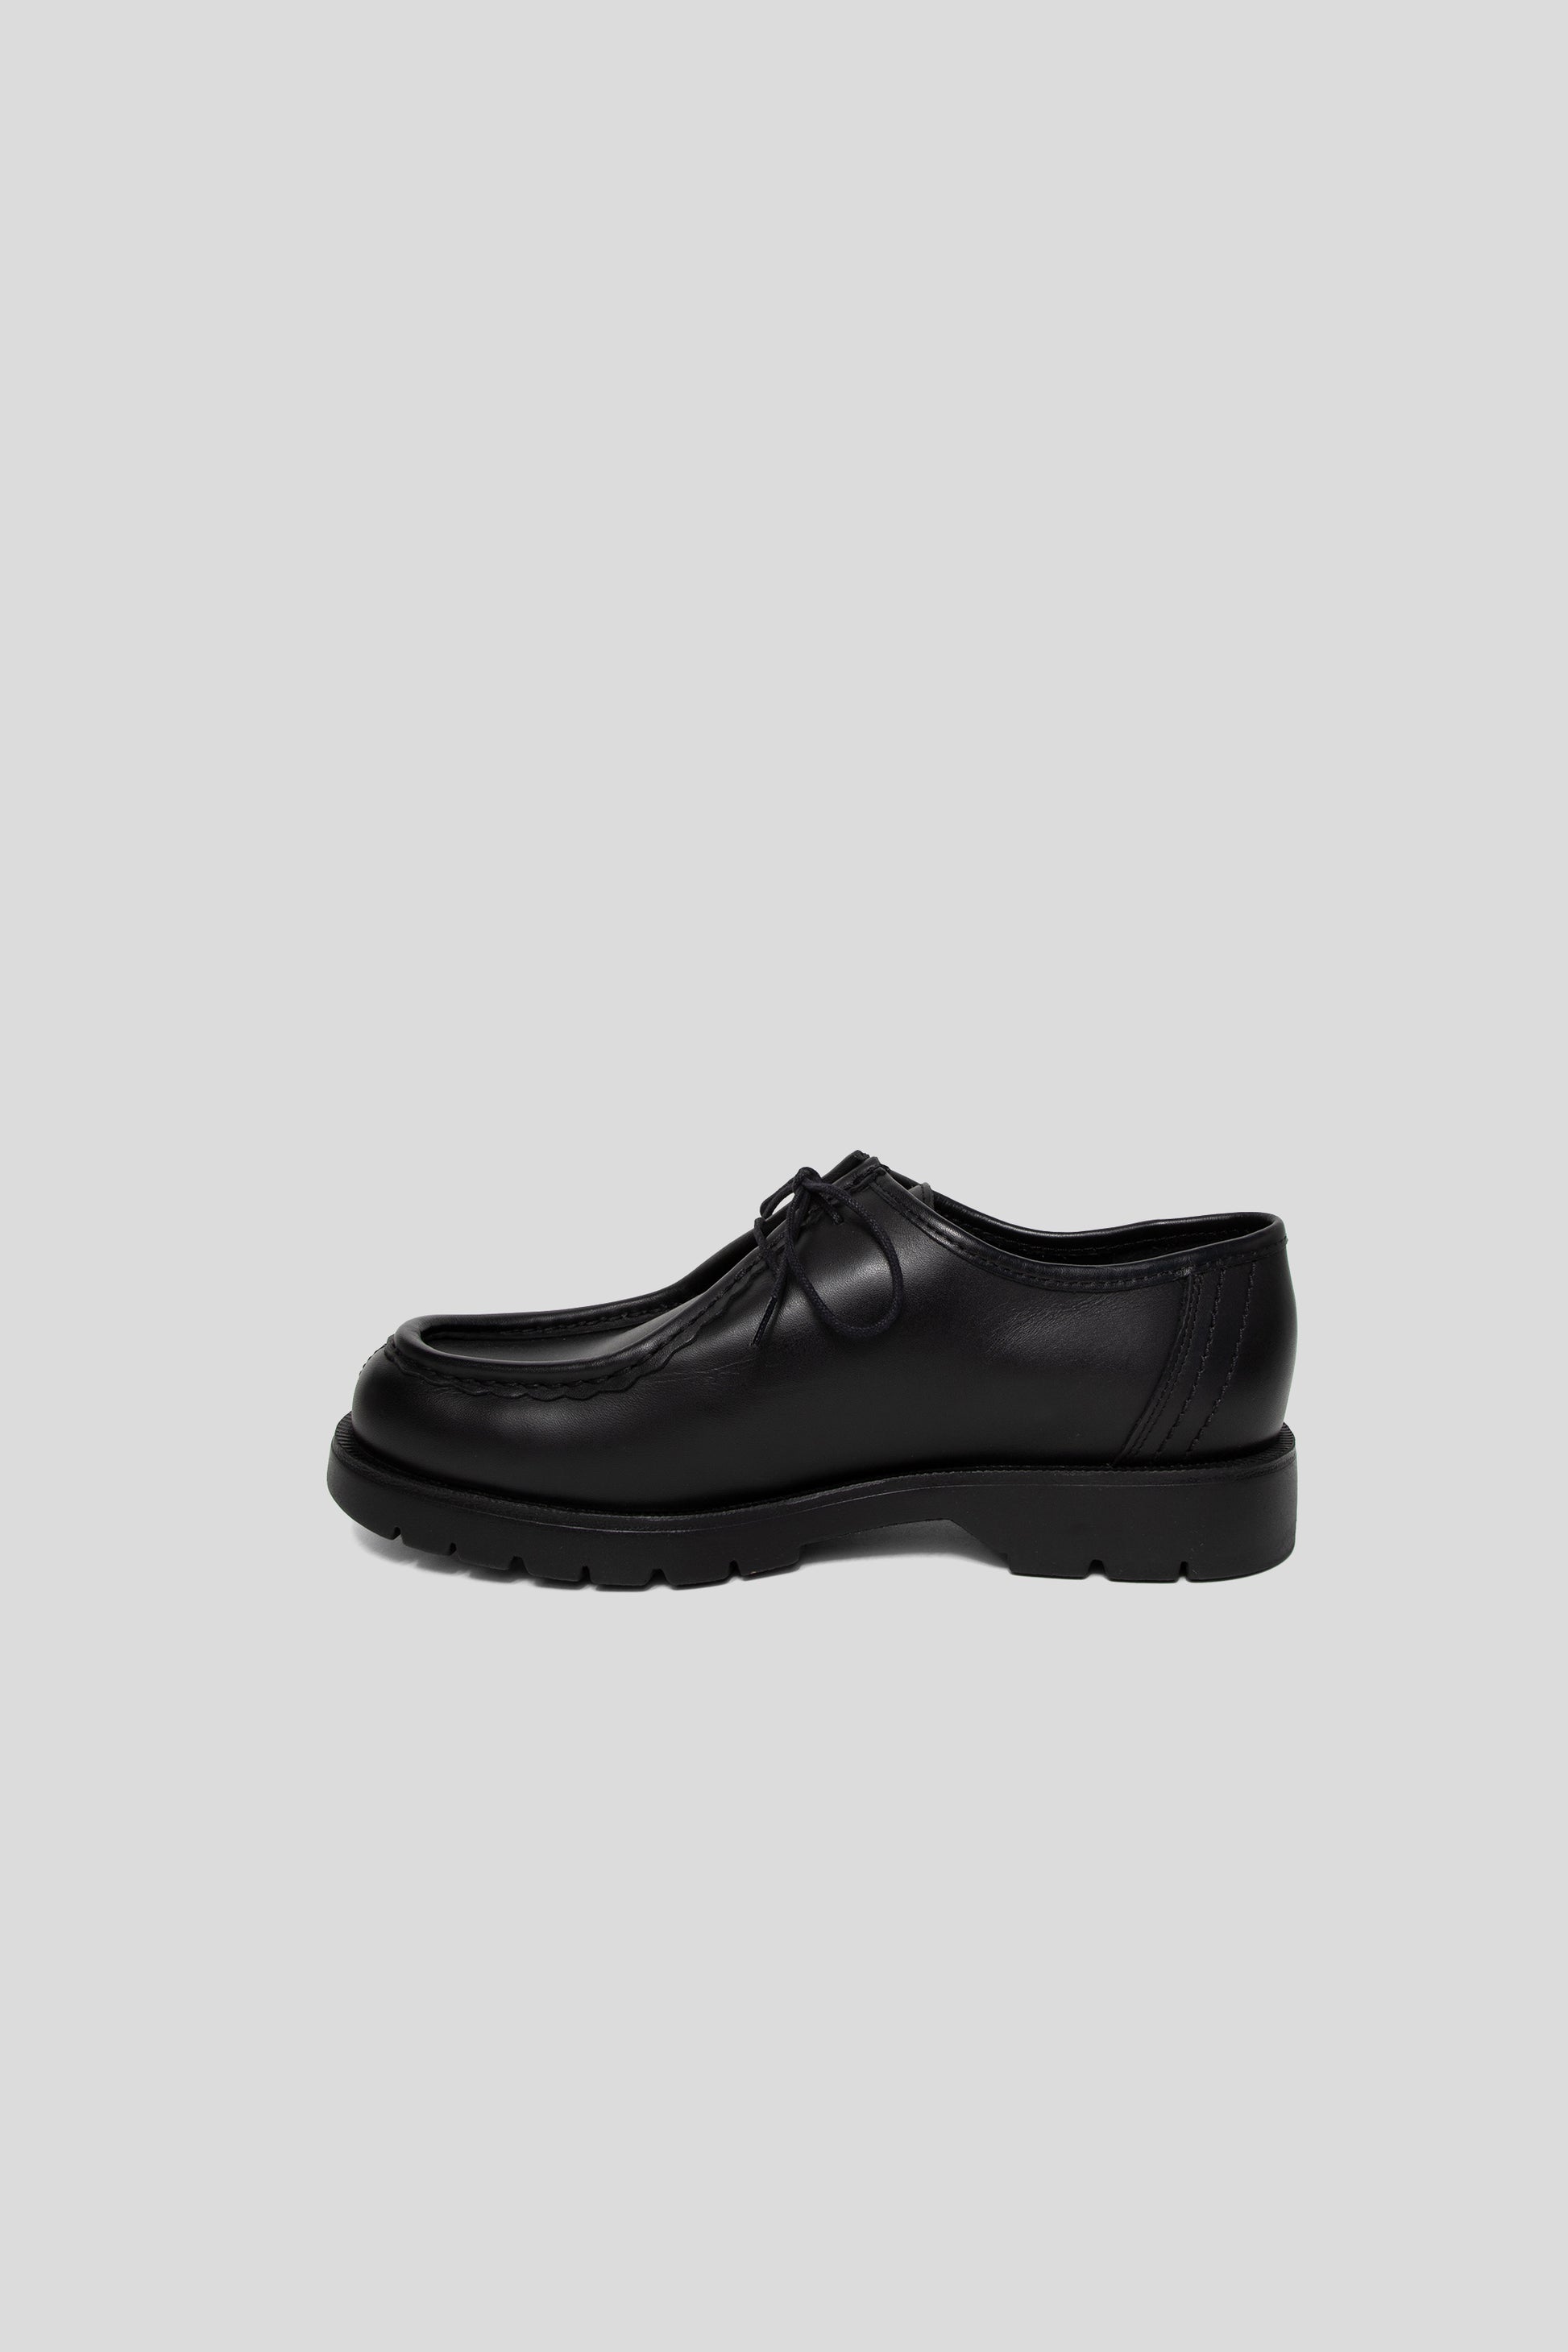 Kleman Padror Shoe in Black